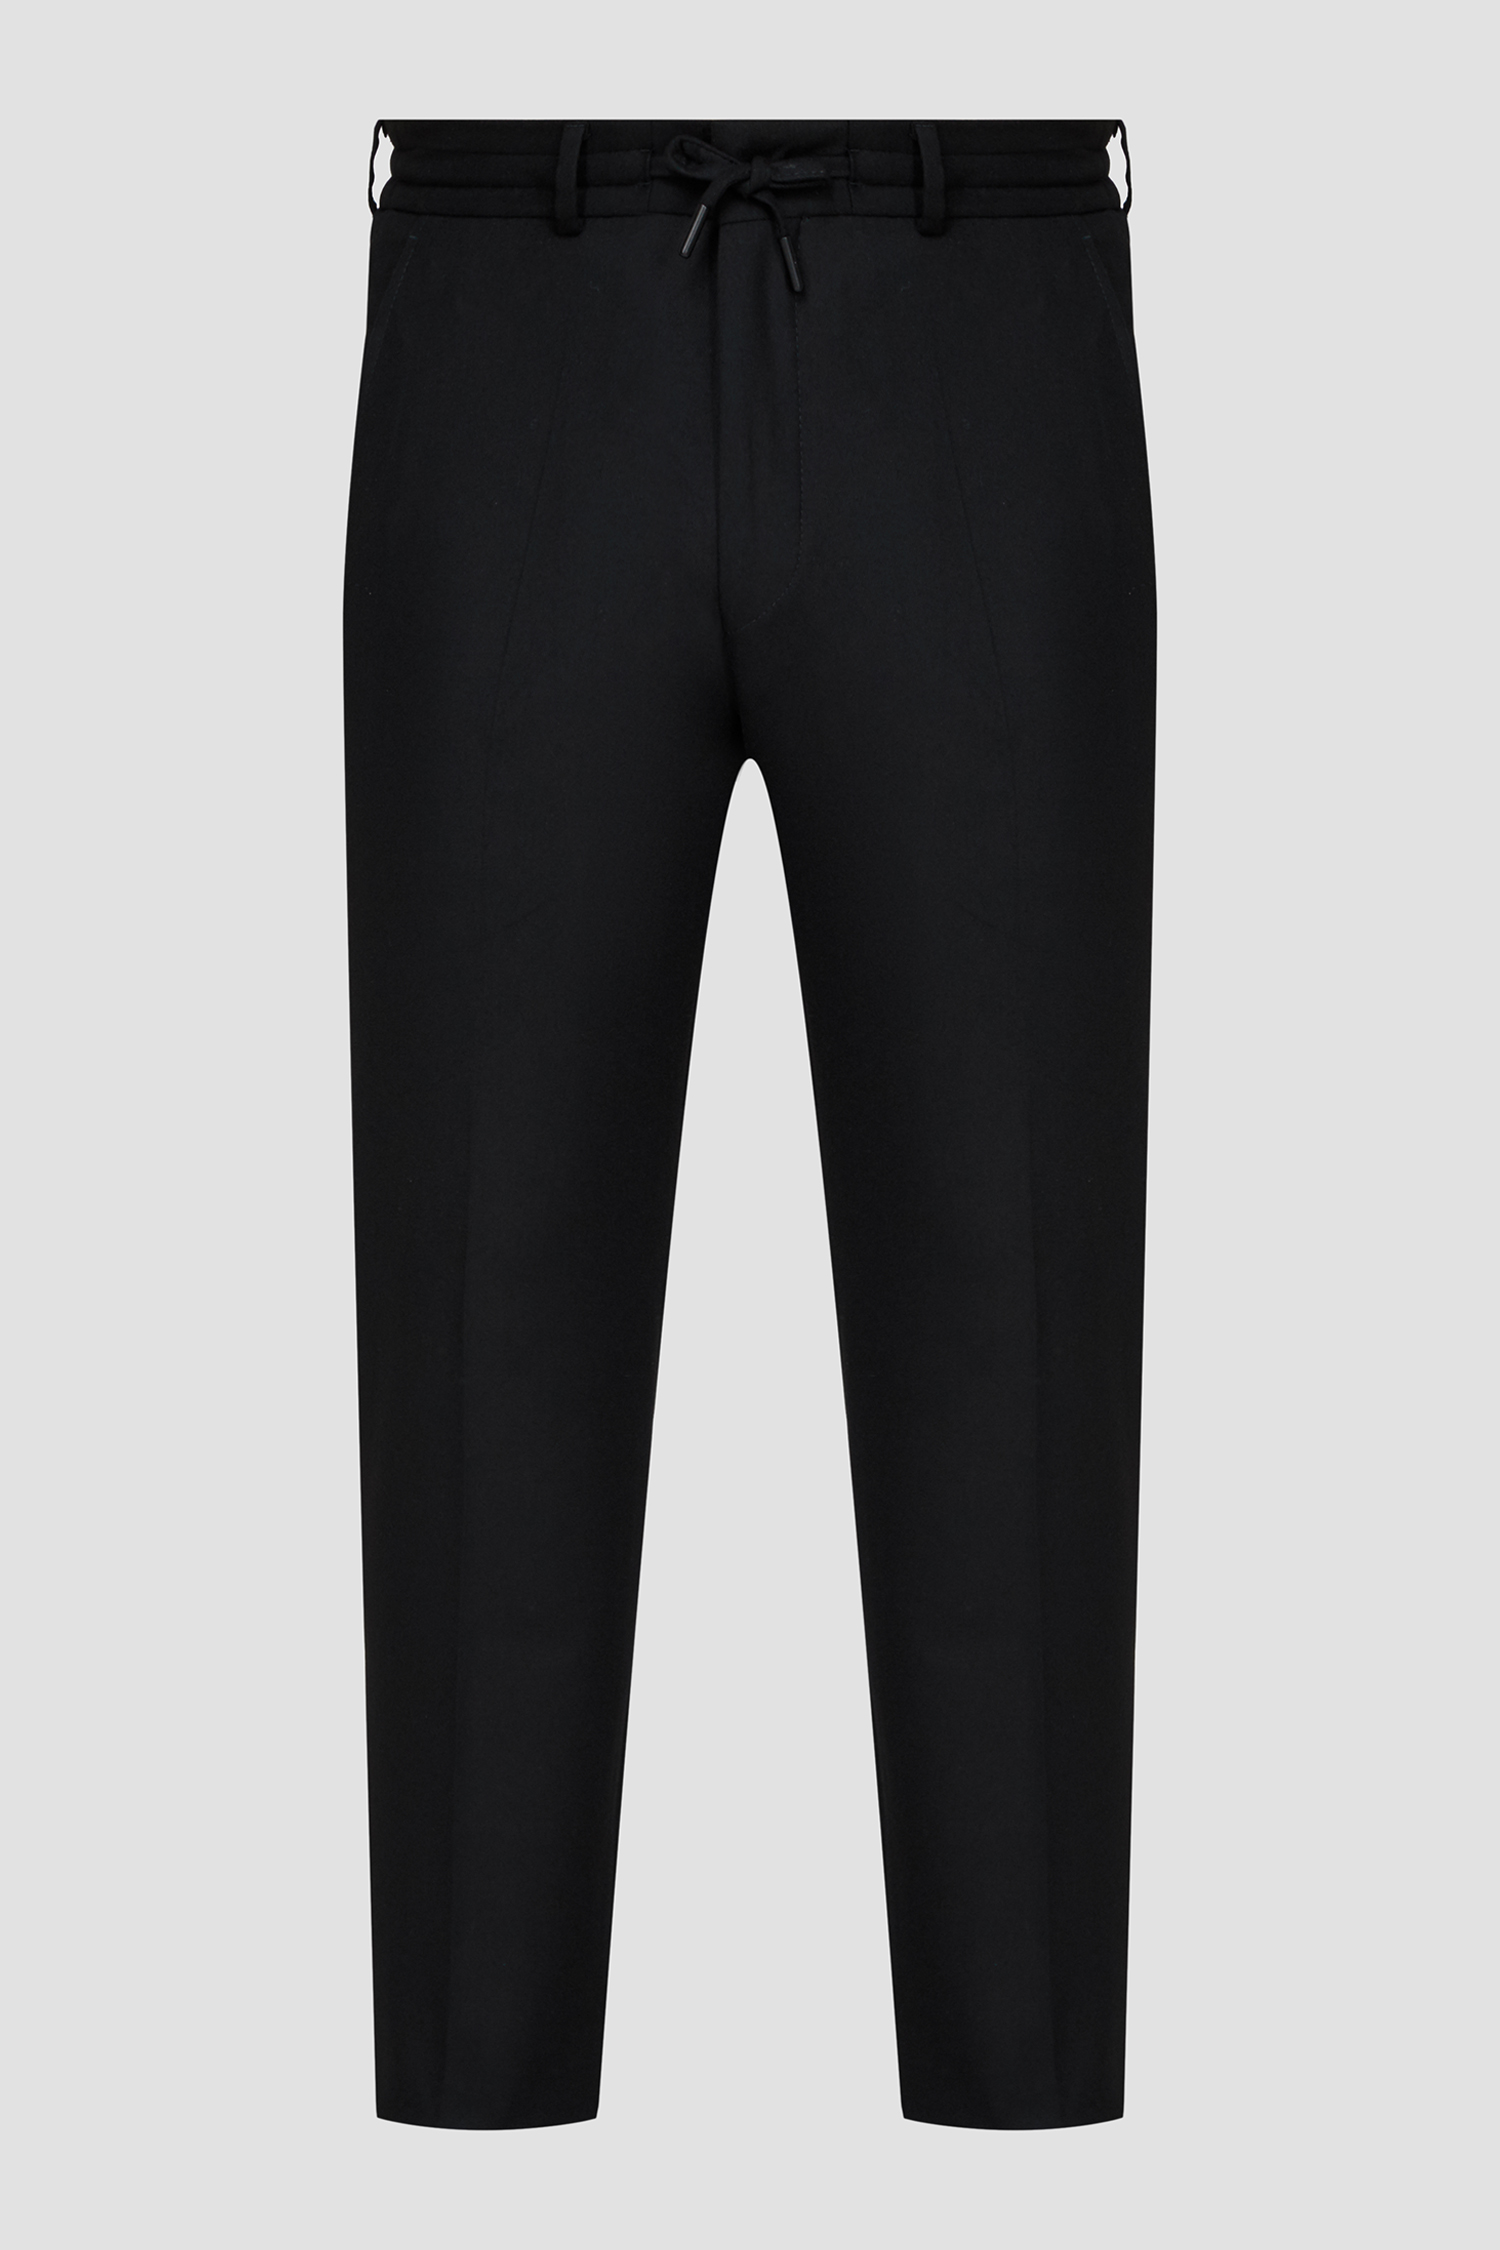 Мужские черные брюки Karl Lagerfeld 534026.255056;990